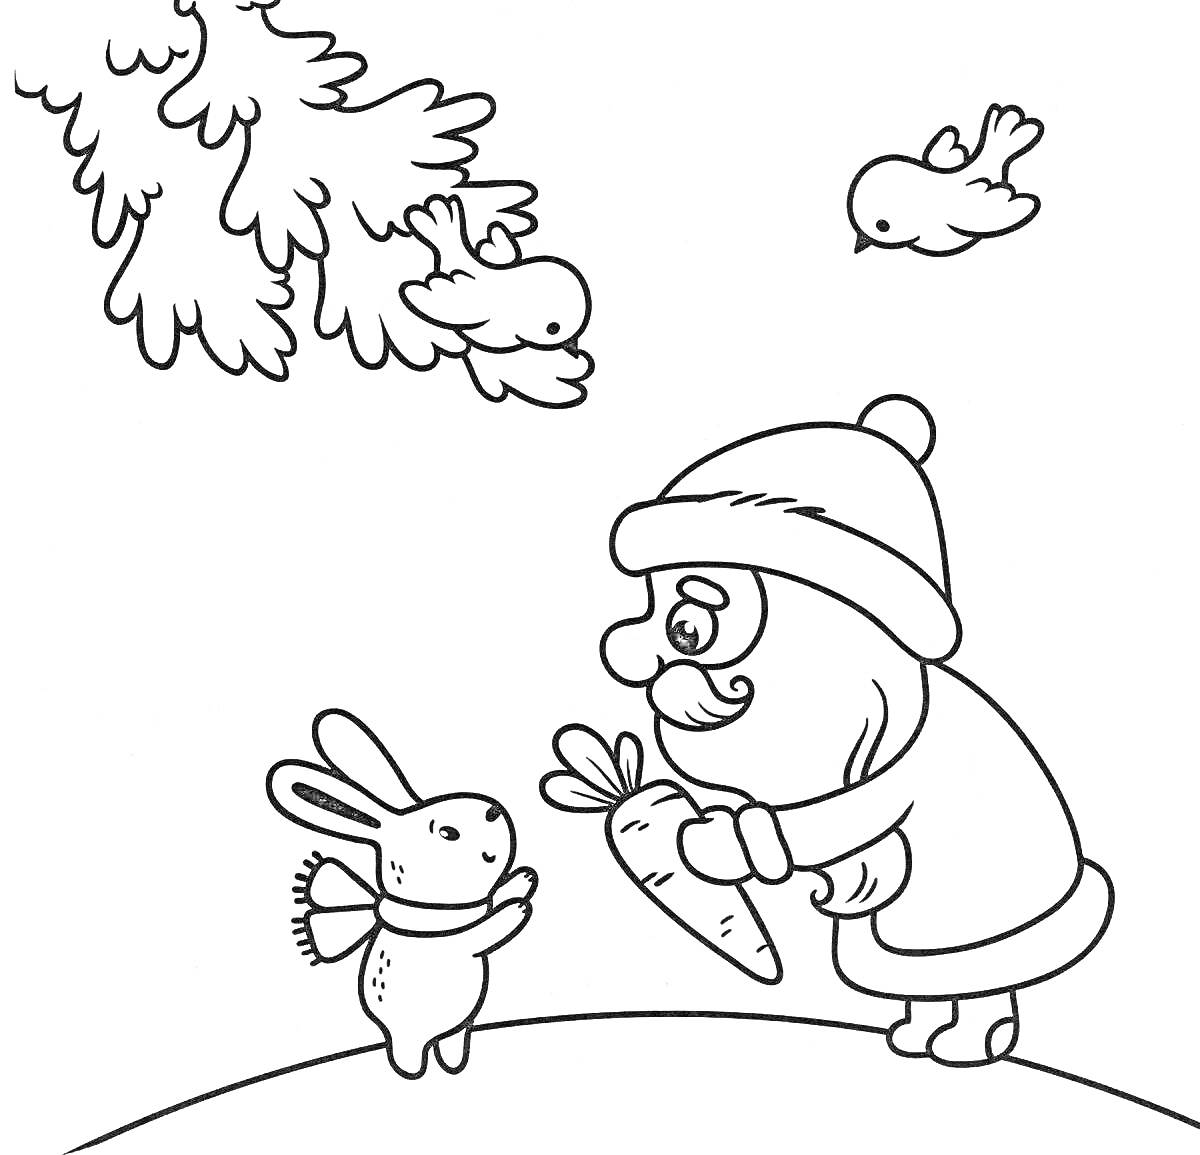 Дед Мороз дарит морковку новогоднему кролику, птицы на ели